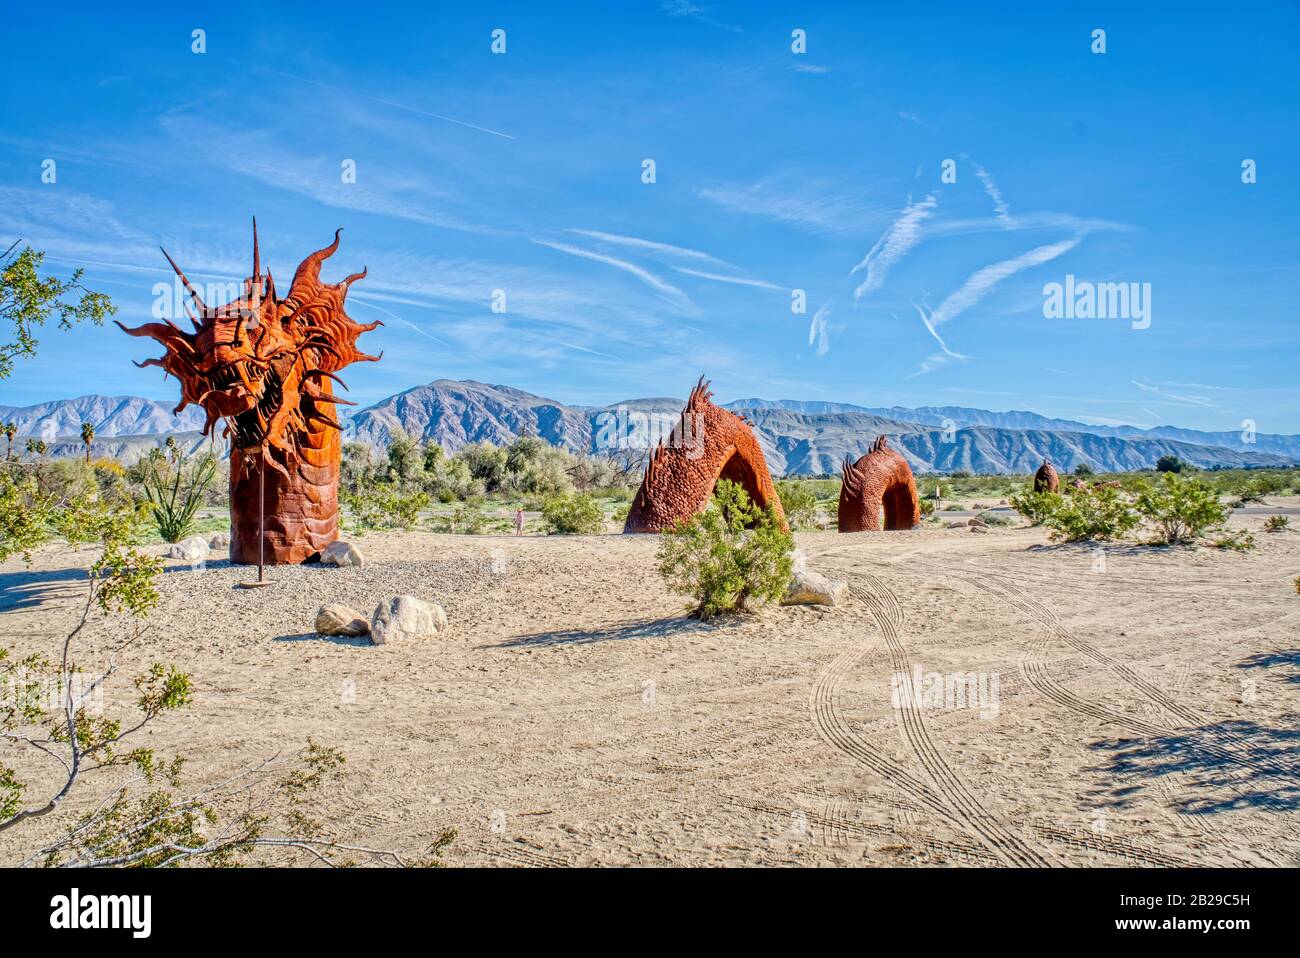 Galleta Meadows In Borrego Springs, Kalifornien, Zeigt Über 130 Große Skulpturen aus Metall mit Verschiedenen Themen WIE Desert Animals und Prehistor Stockfoto